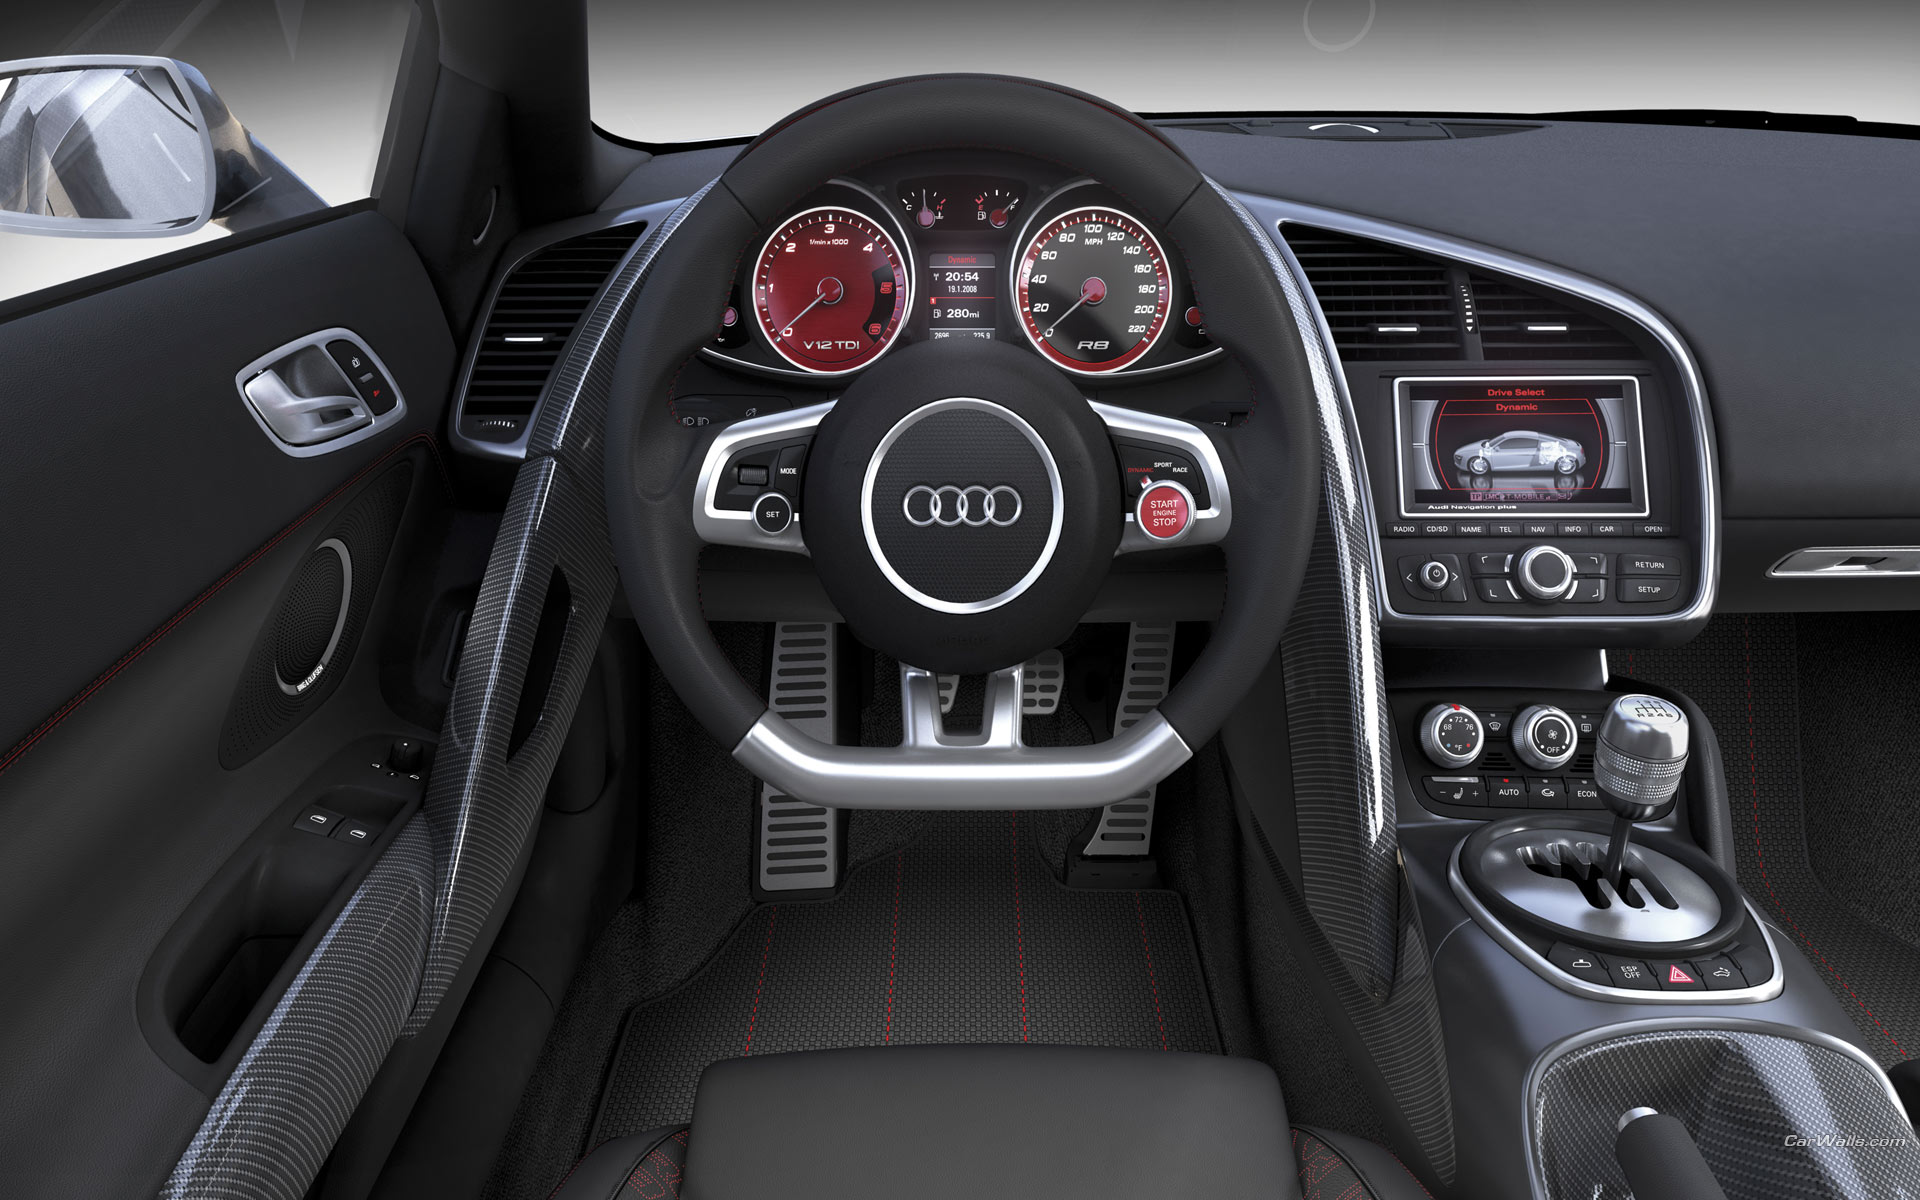 Download full size R8 V12 TDI 2008 dashboard wheel Audi wallpaper / 1920x1200